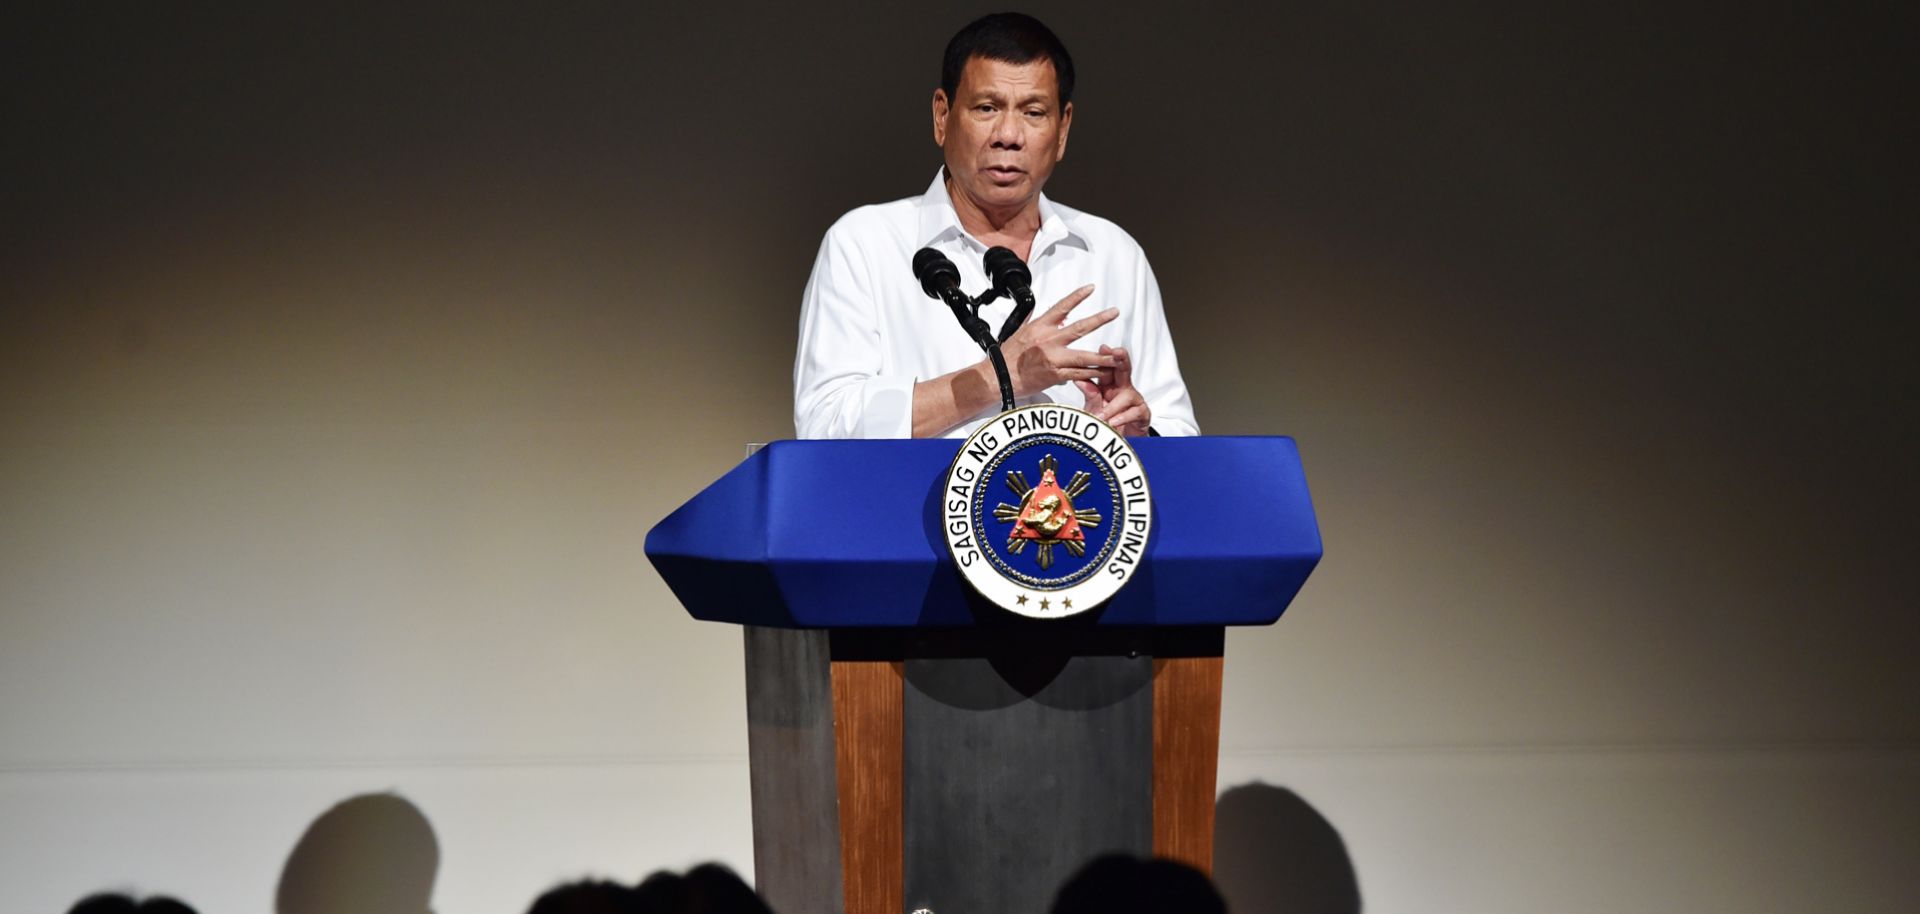 Philippine President Rodrigo Duterte delivers a speech at the Philippines Economic Forum in Tokyo on Oct. 26